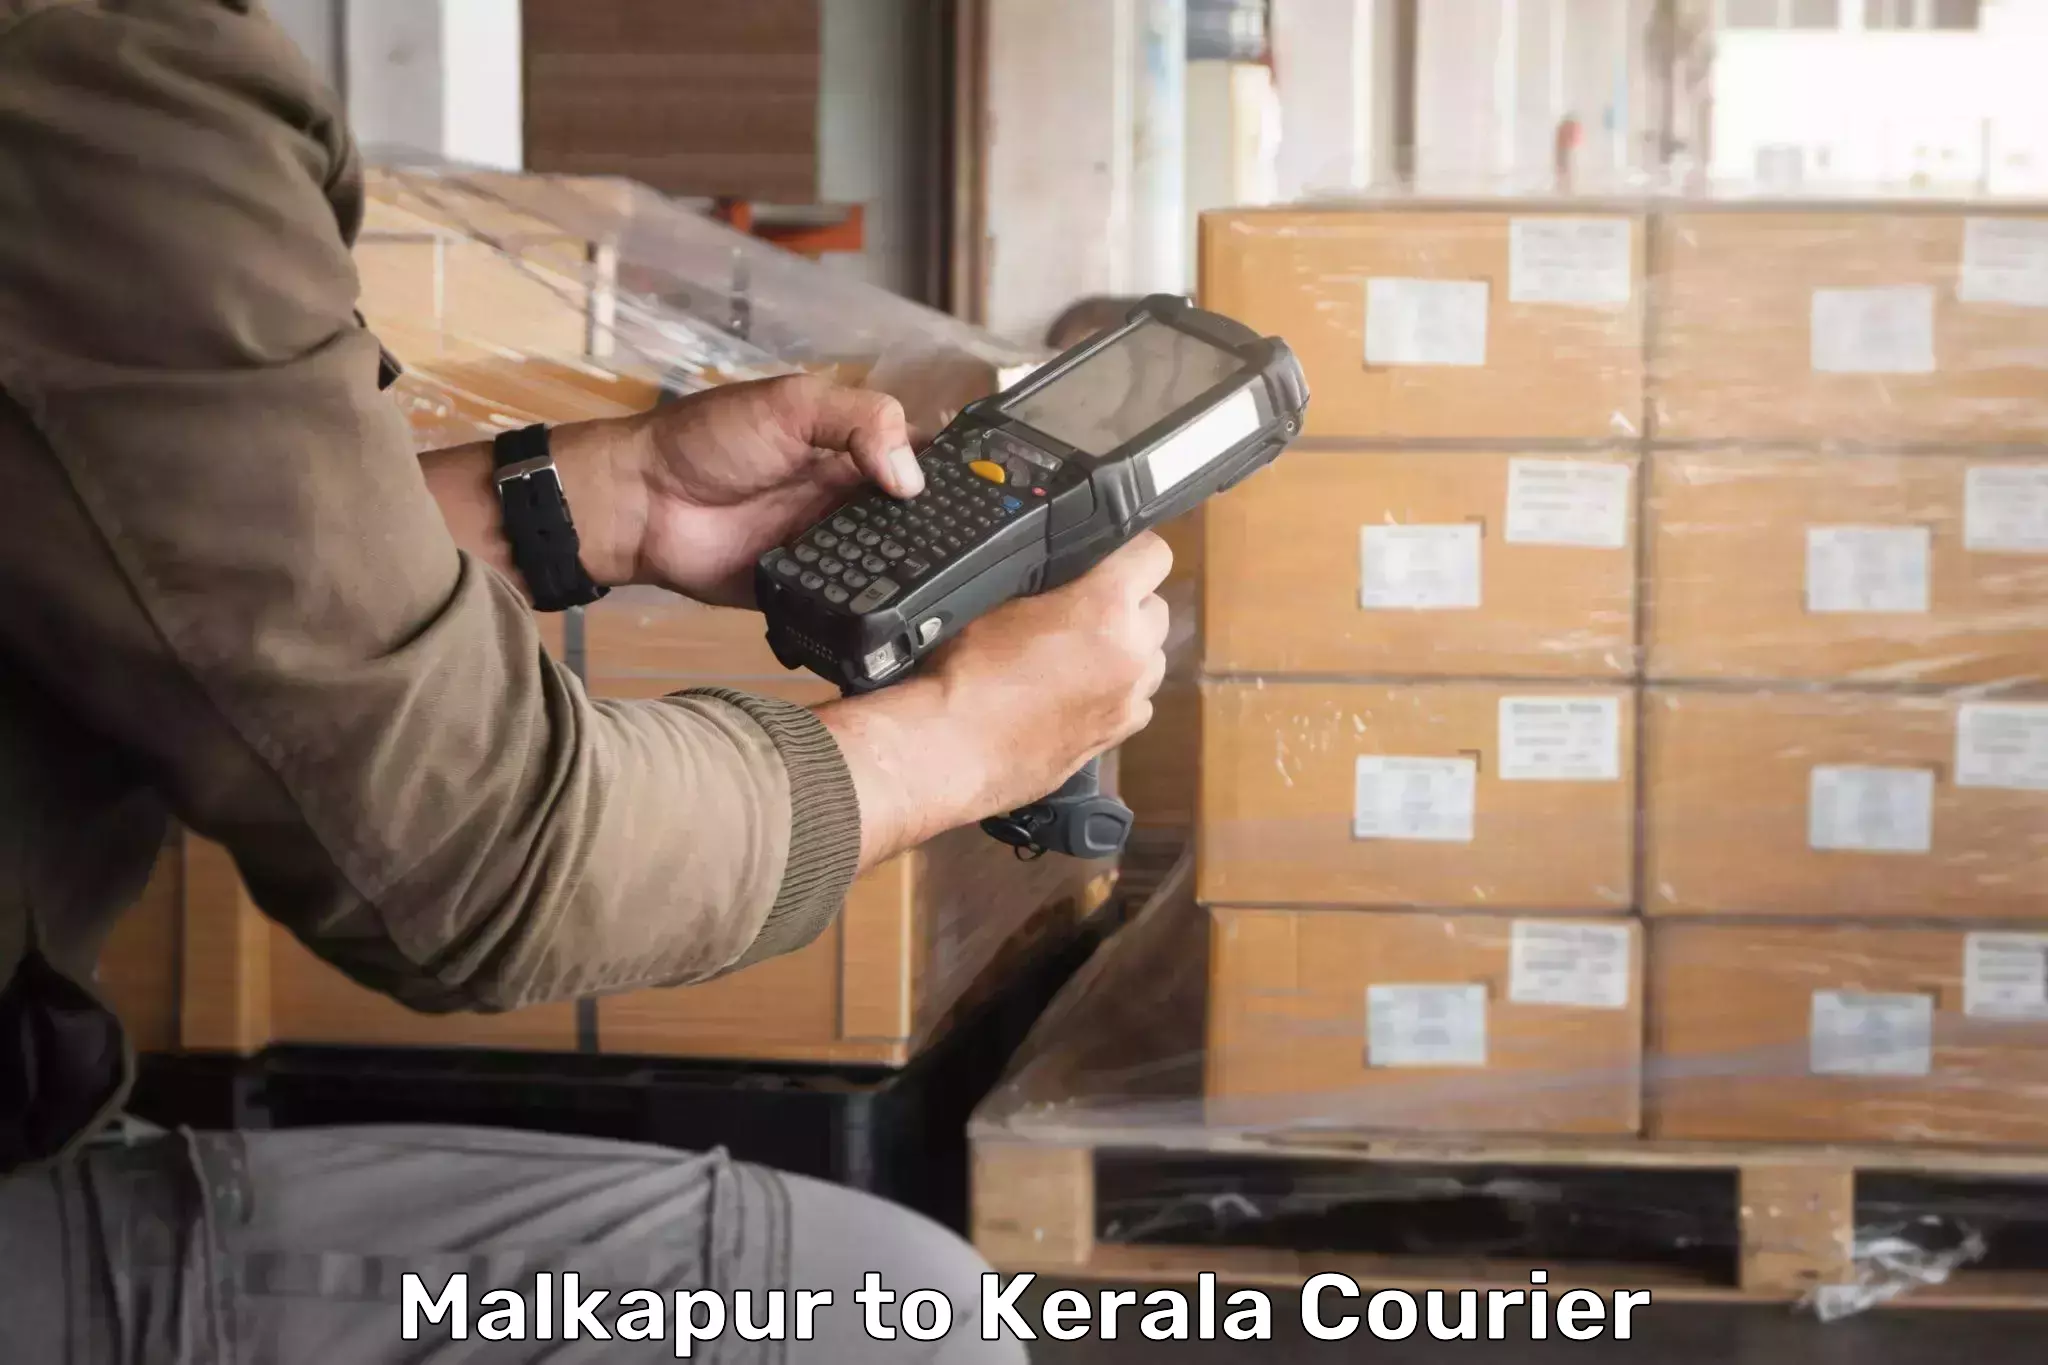 Efficient order fulfillment in Malkapur to Kerala